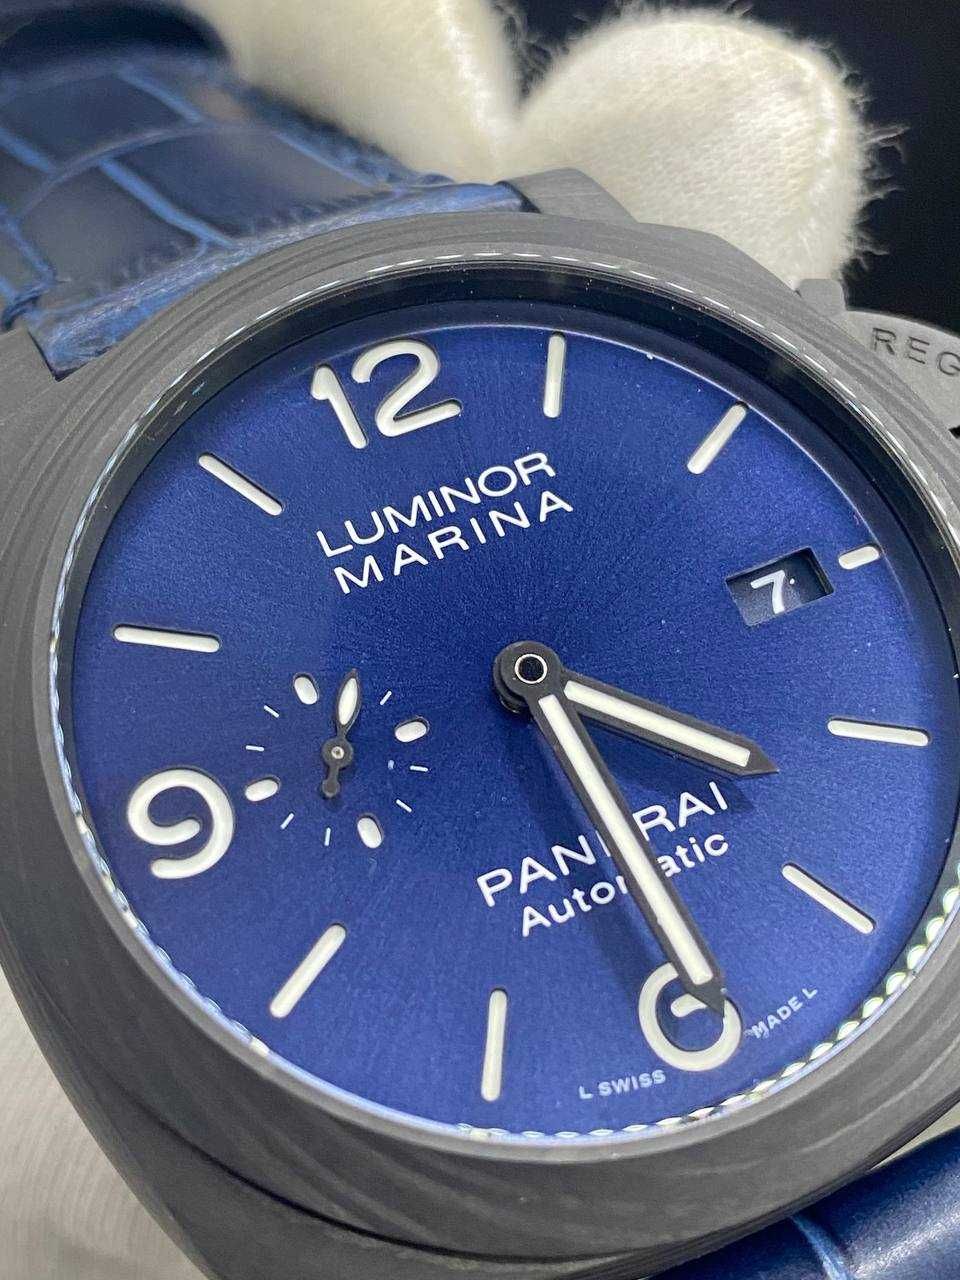 Panerai Luminor Marina Carbotech Blu Notte PAM1664 Limited-Edition